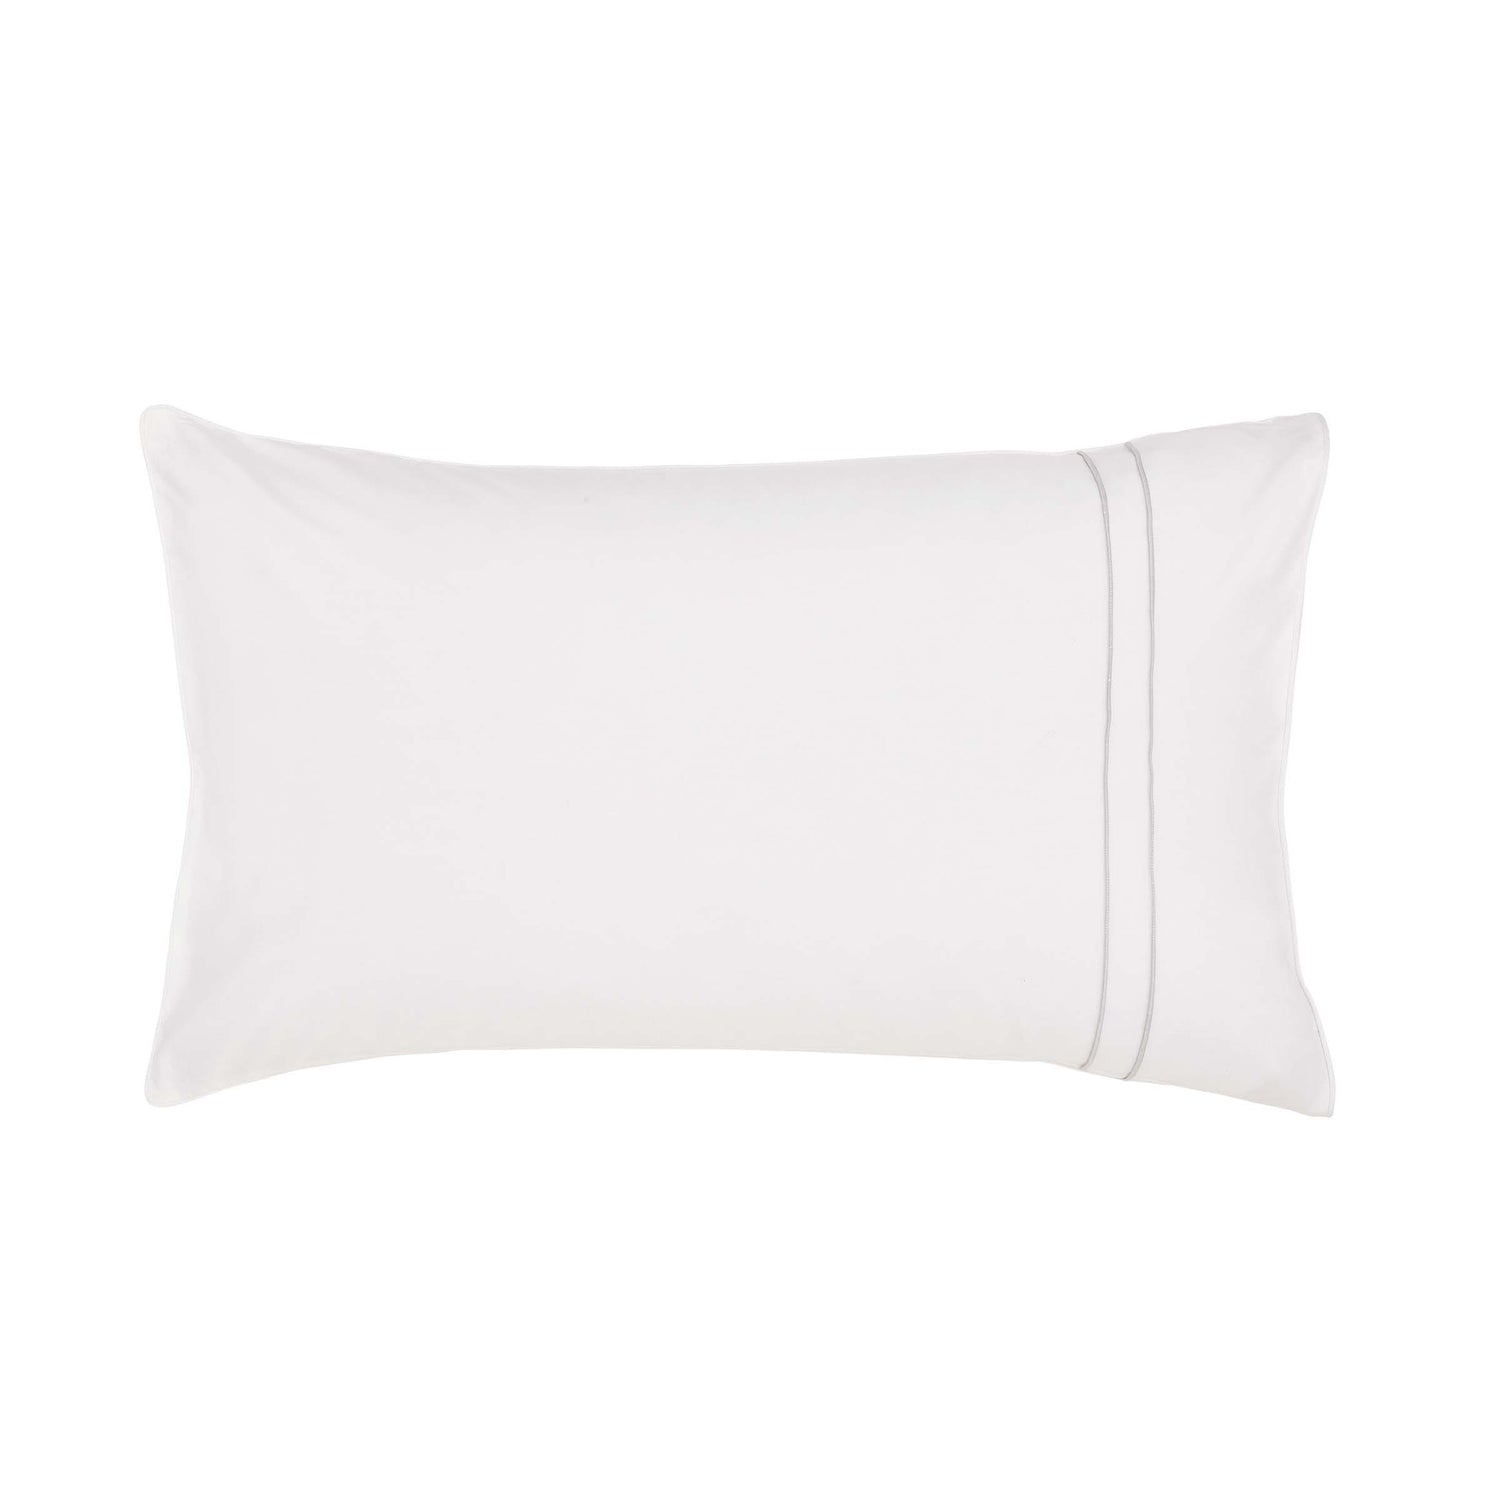 White Murmur Standard Pillowcase with Grey Pinstripe